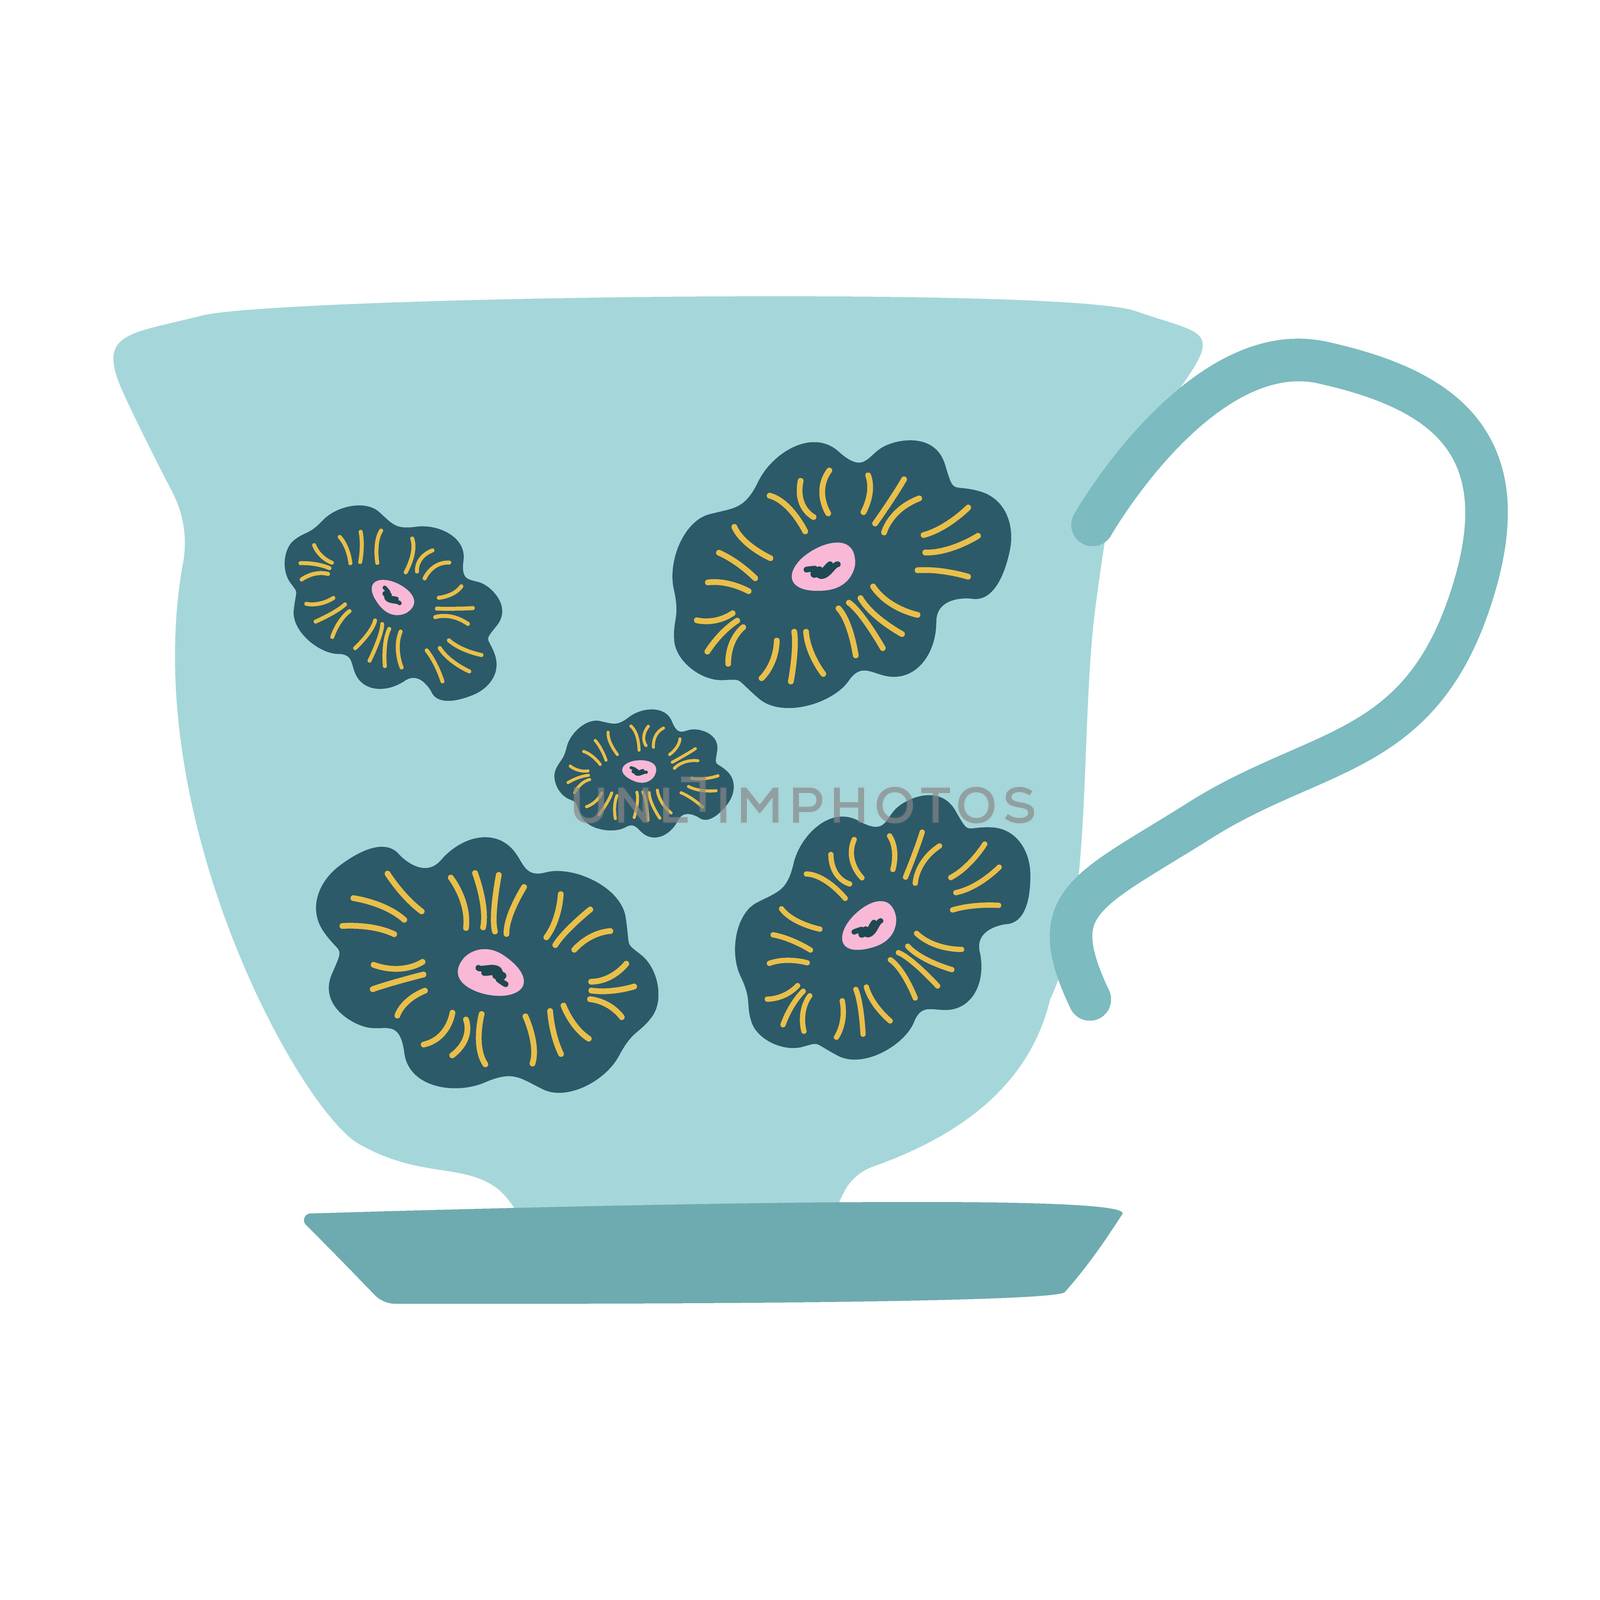 Retro light blue tea cup with teal color flowers. by Nata_Prando